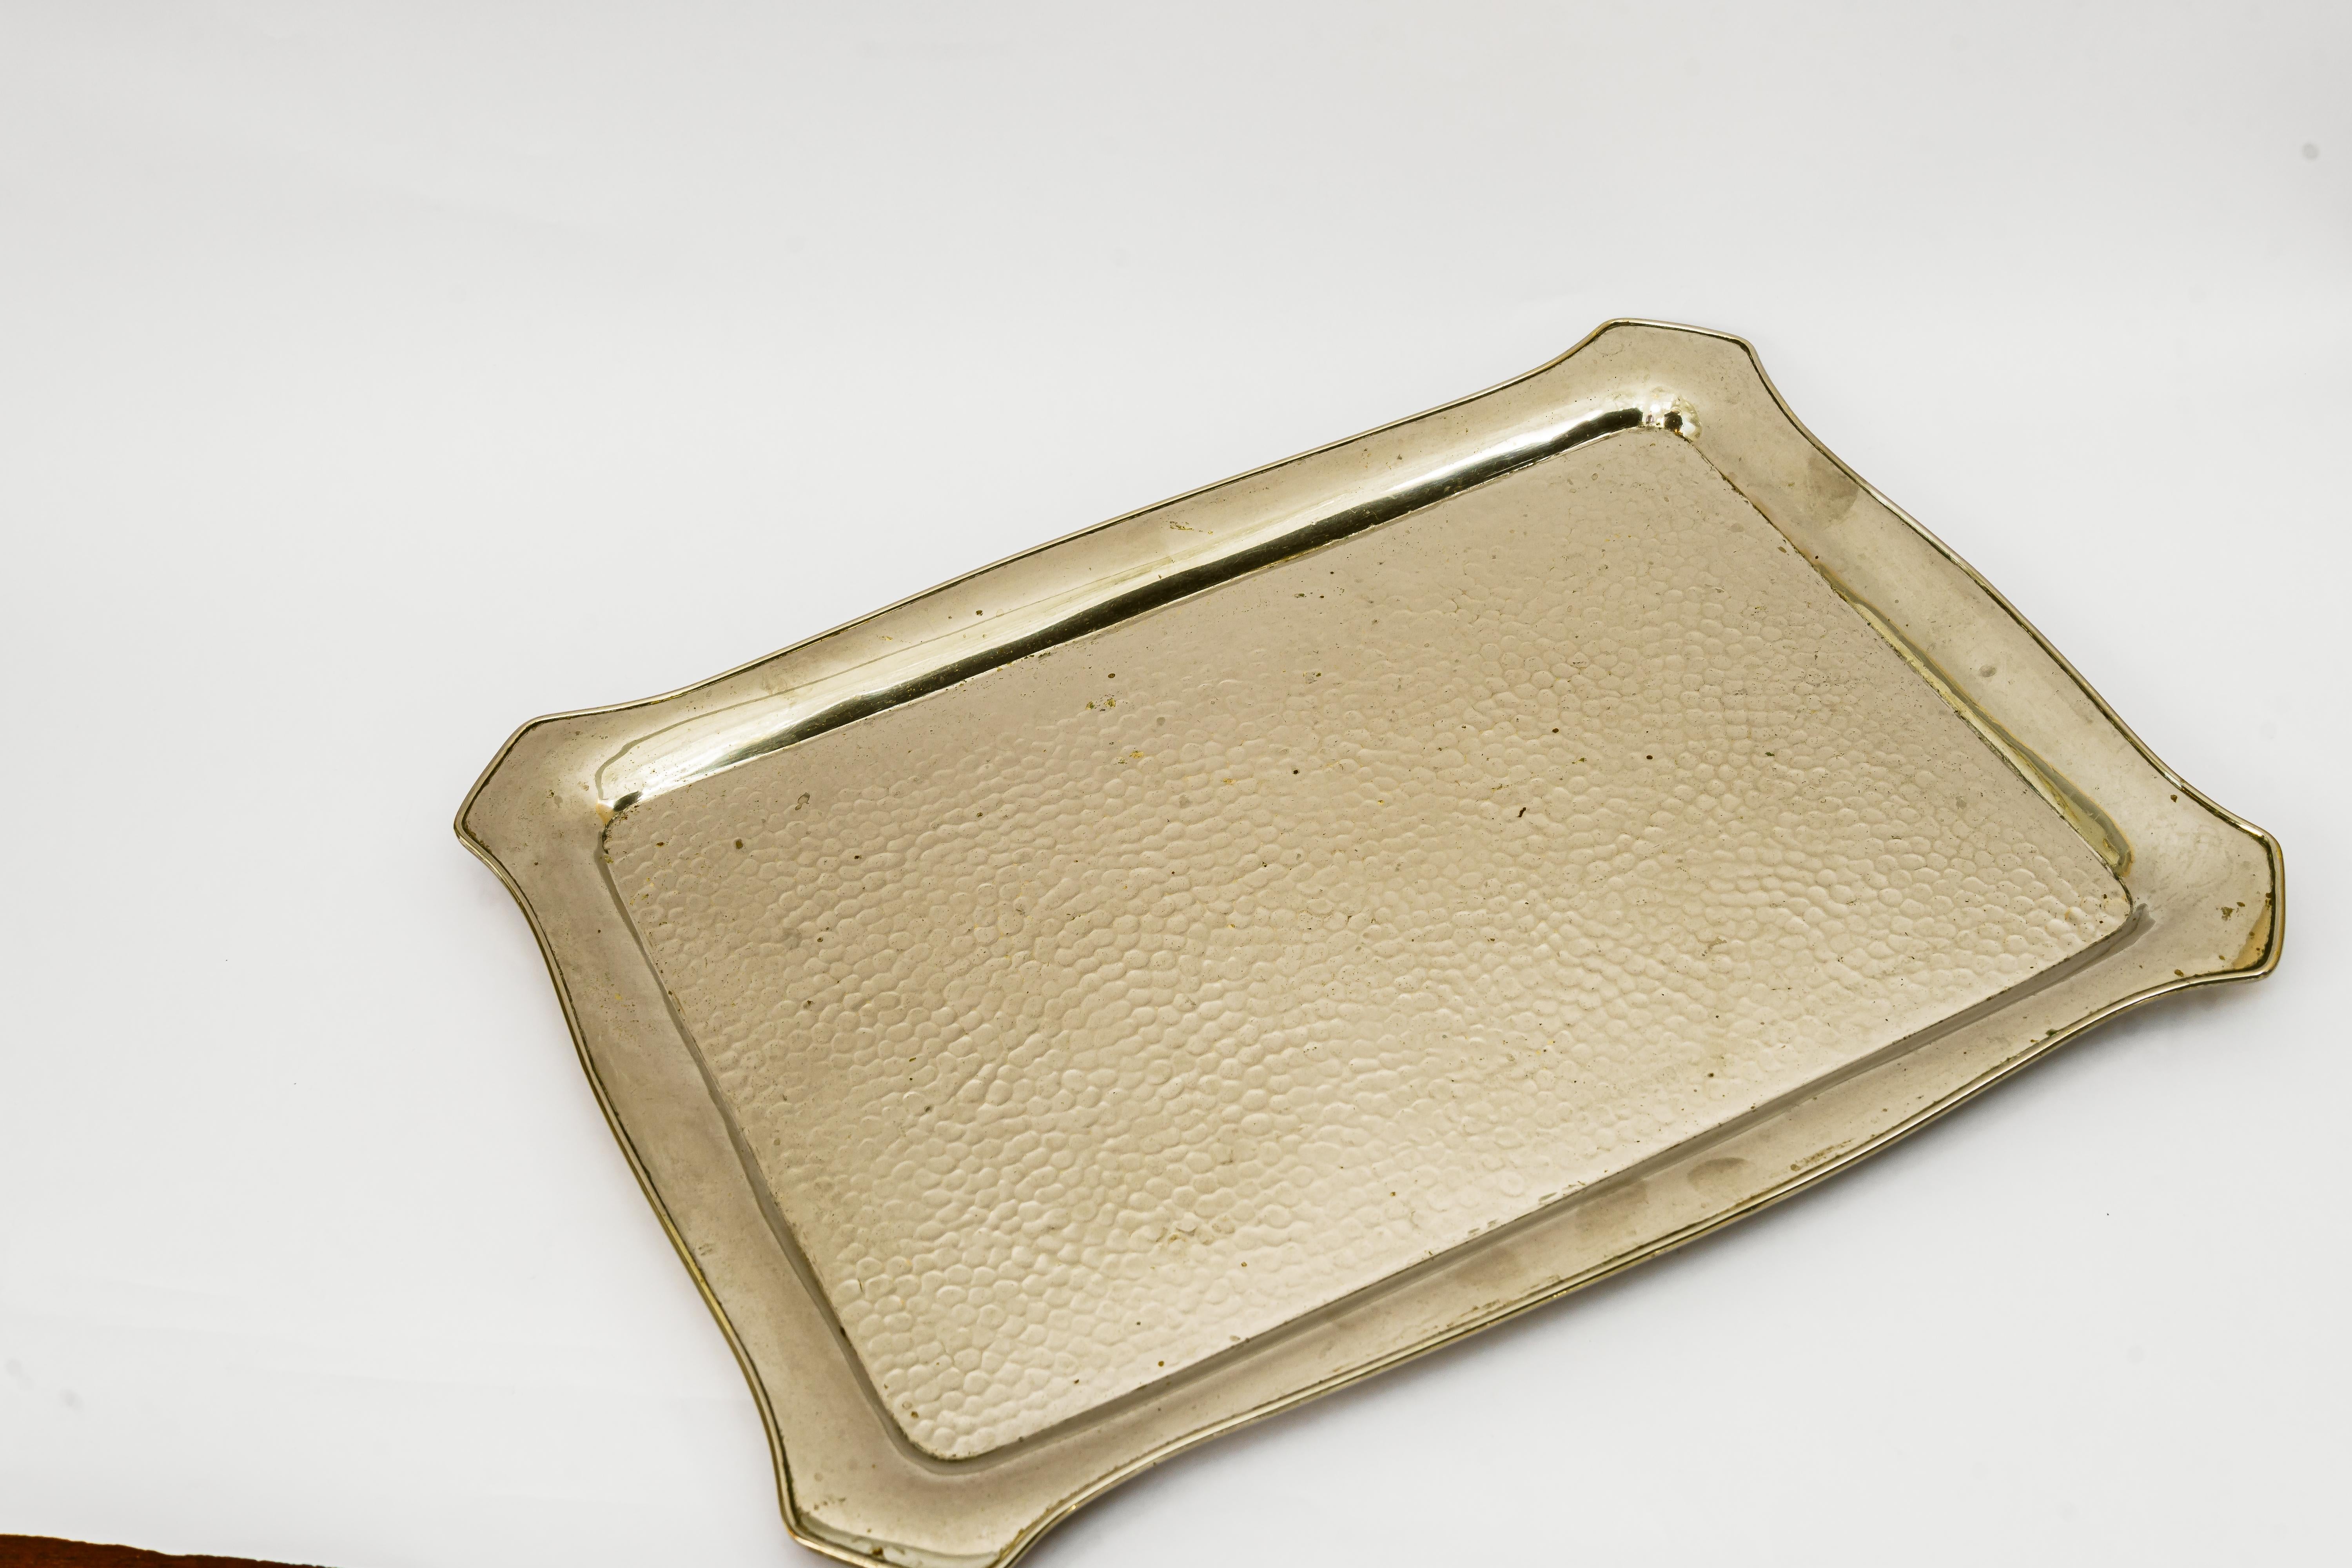 Bigli Art Deco Nickel- Plated Serving Plate vienna around 1920s
Laiton nickelé
Etat original